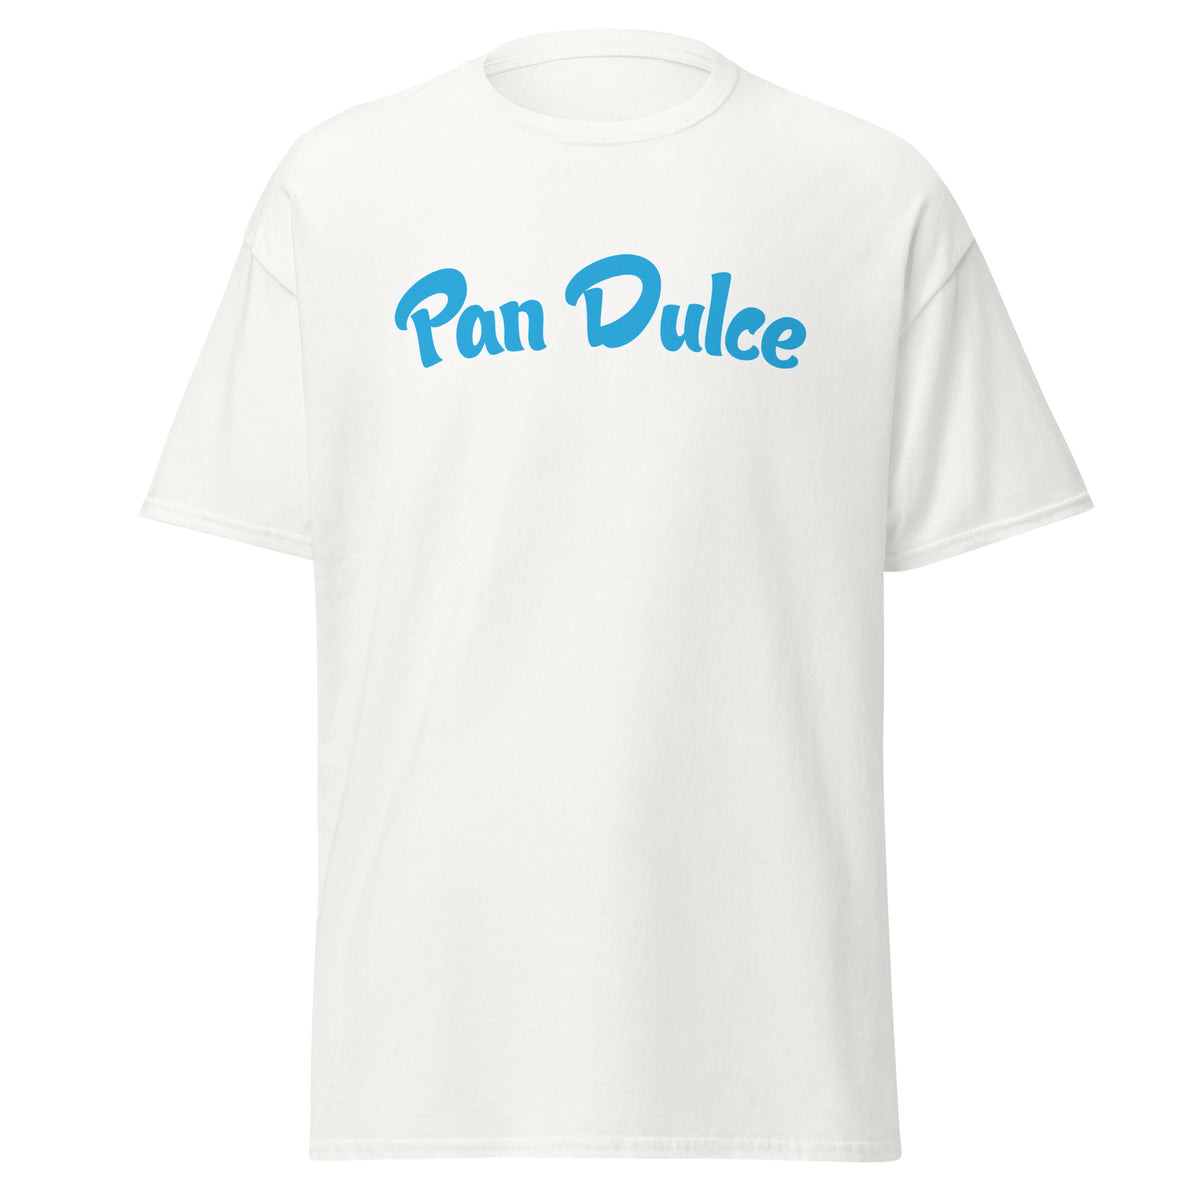 Pan Dulce T-Shirt (Sweet Bread)